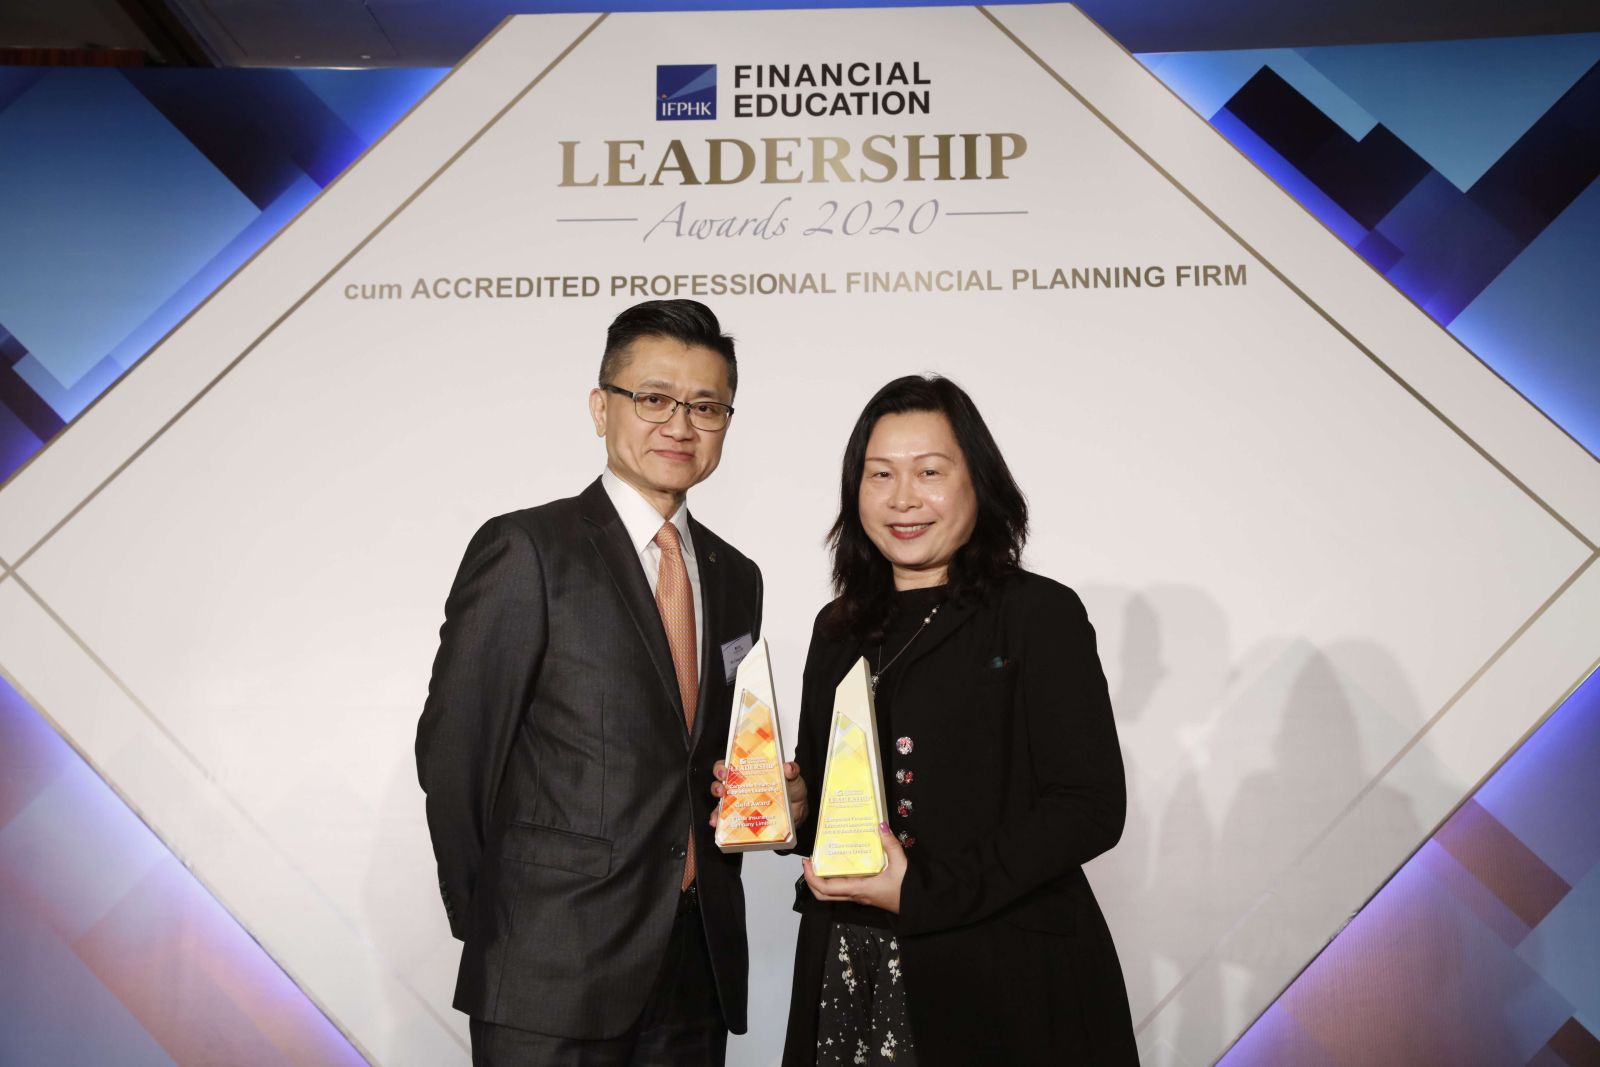 FTLife won two awards at the IFPHK Financial Education Leadership Awards